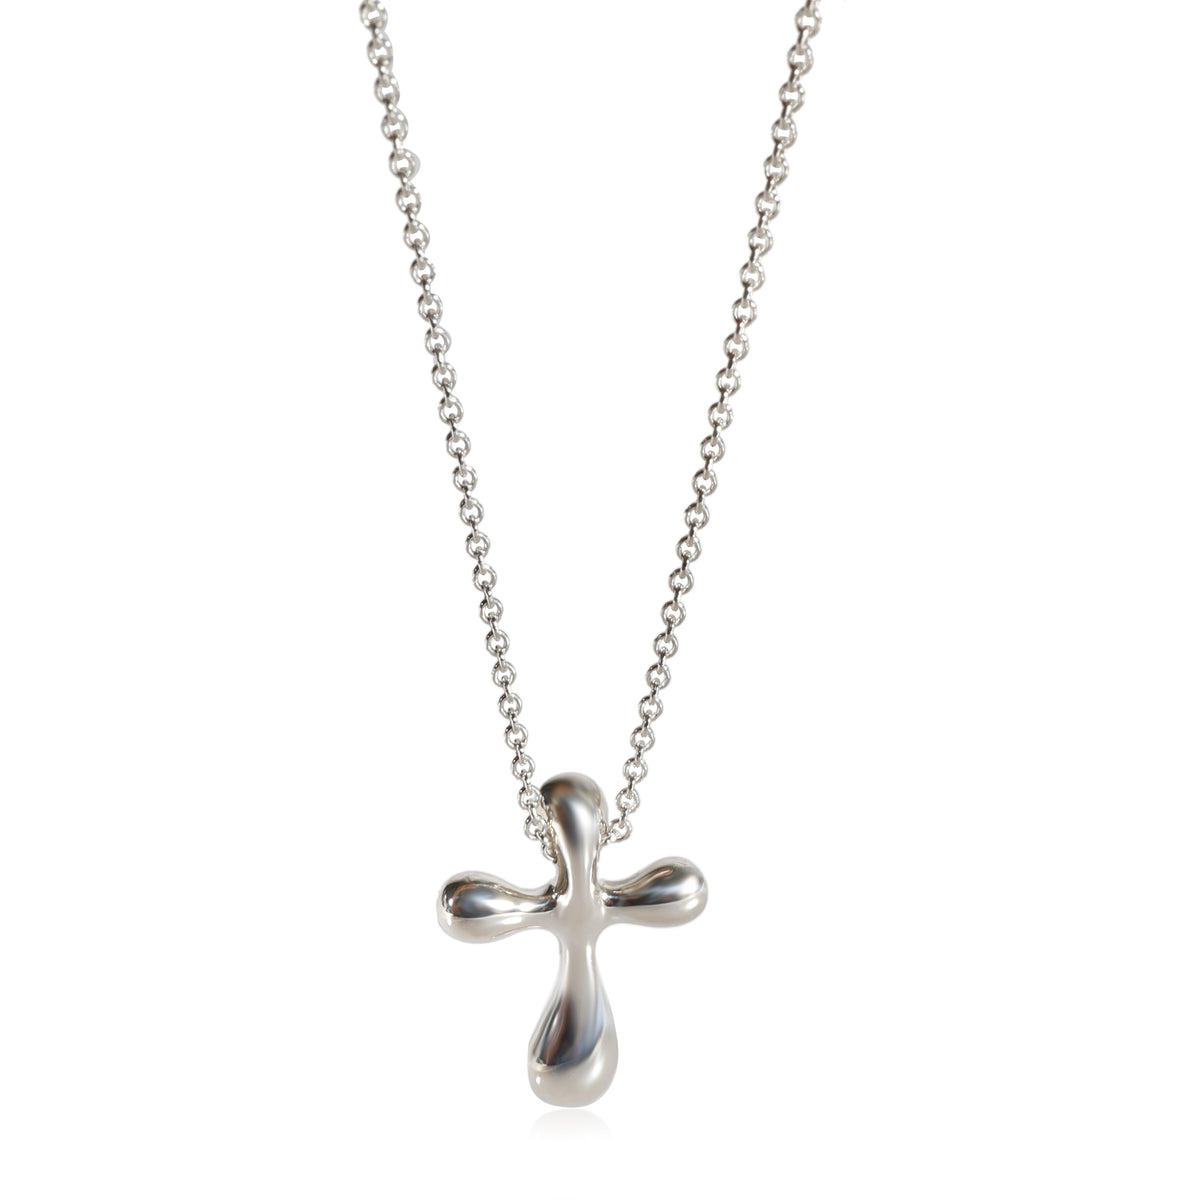 Tiffany & Co. Elsa Peretti Cross Pendant on Chain in Sterling Silver